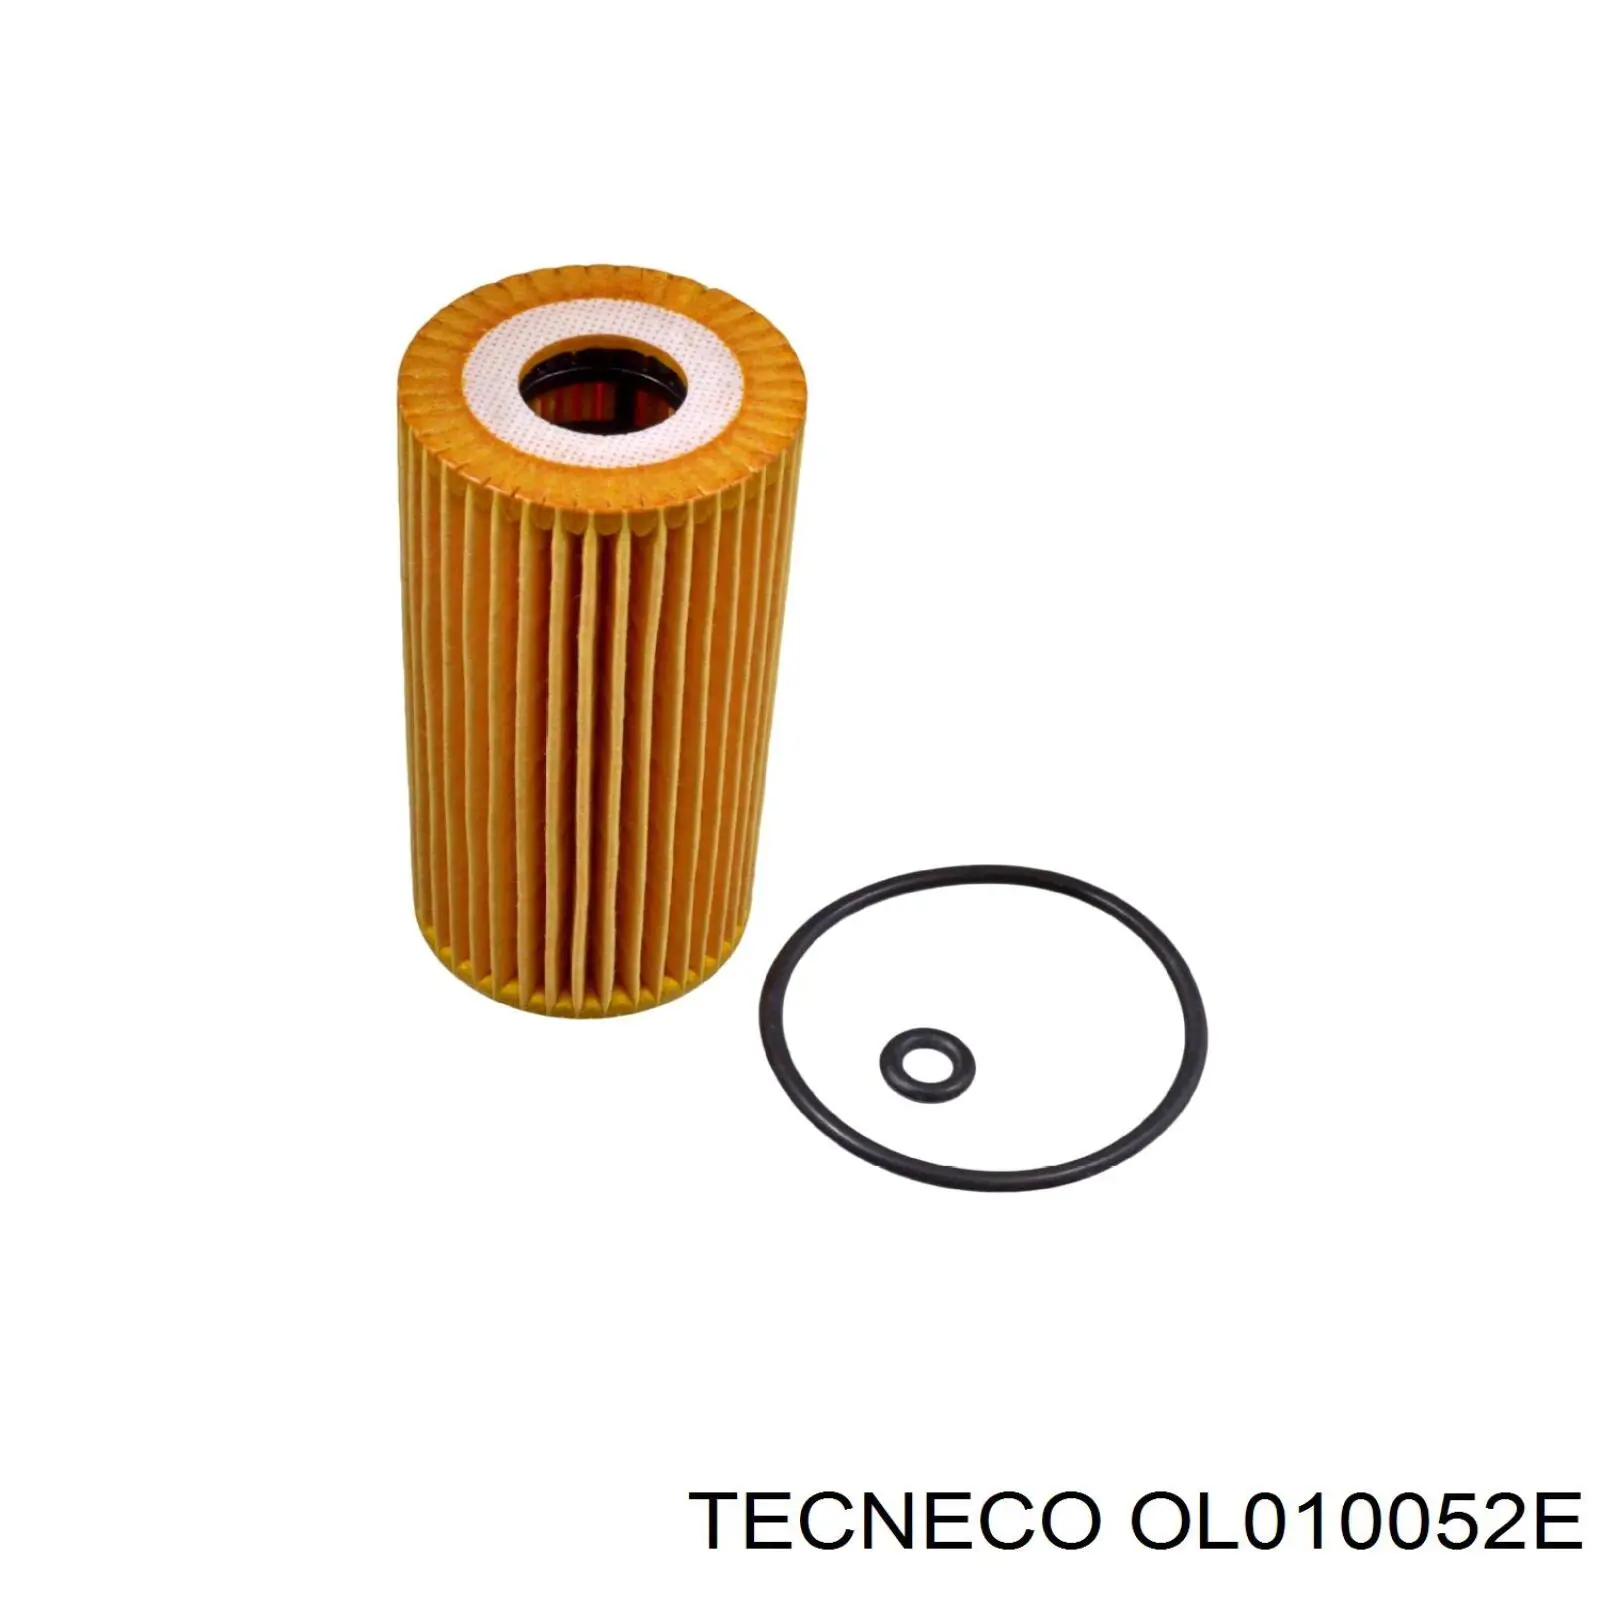 OL010052E Tecneco filtro de aceite